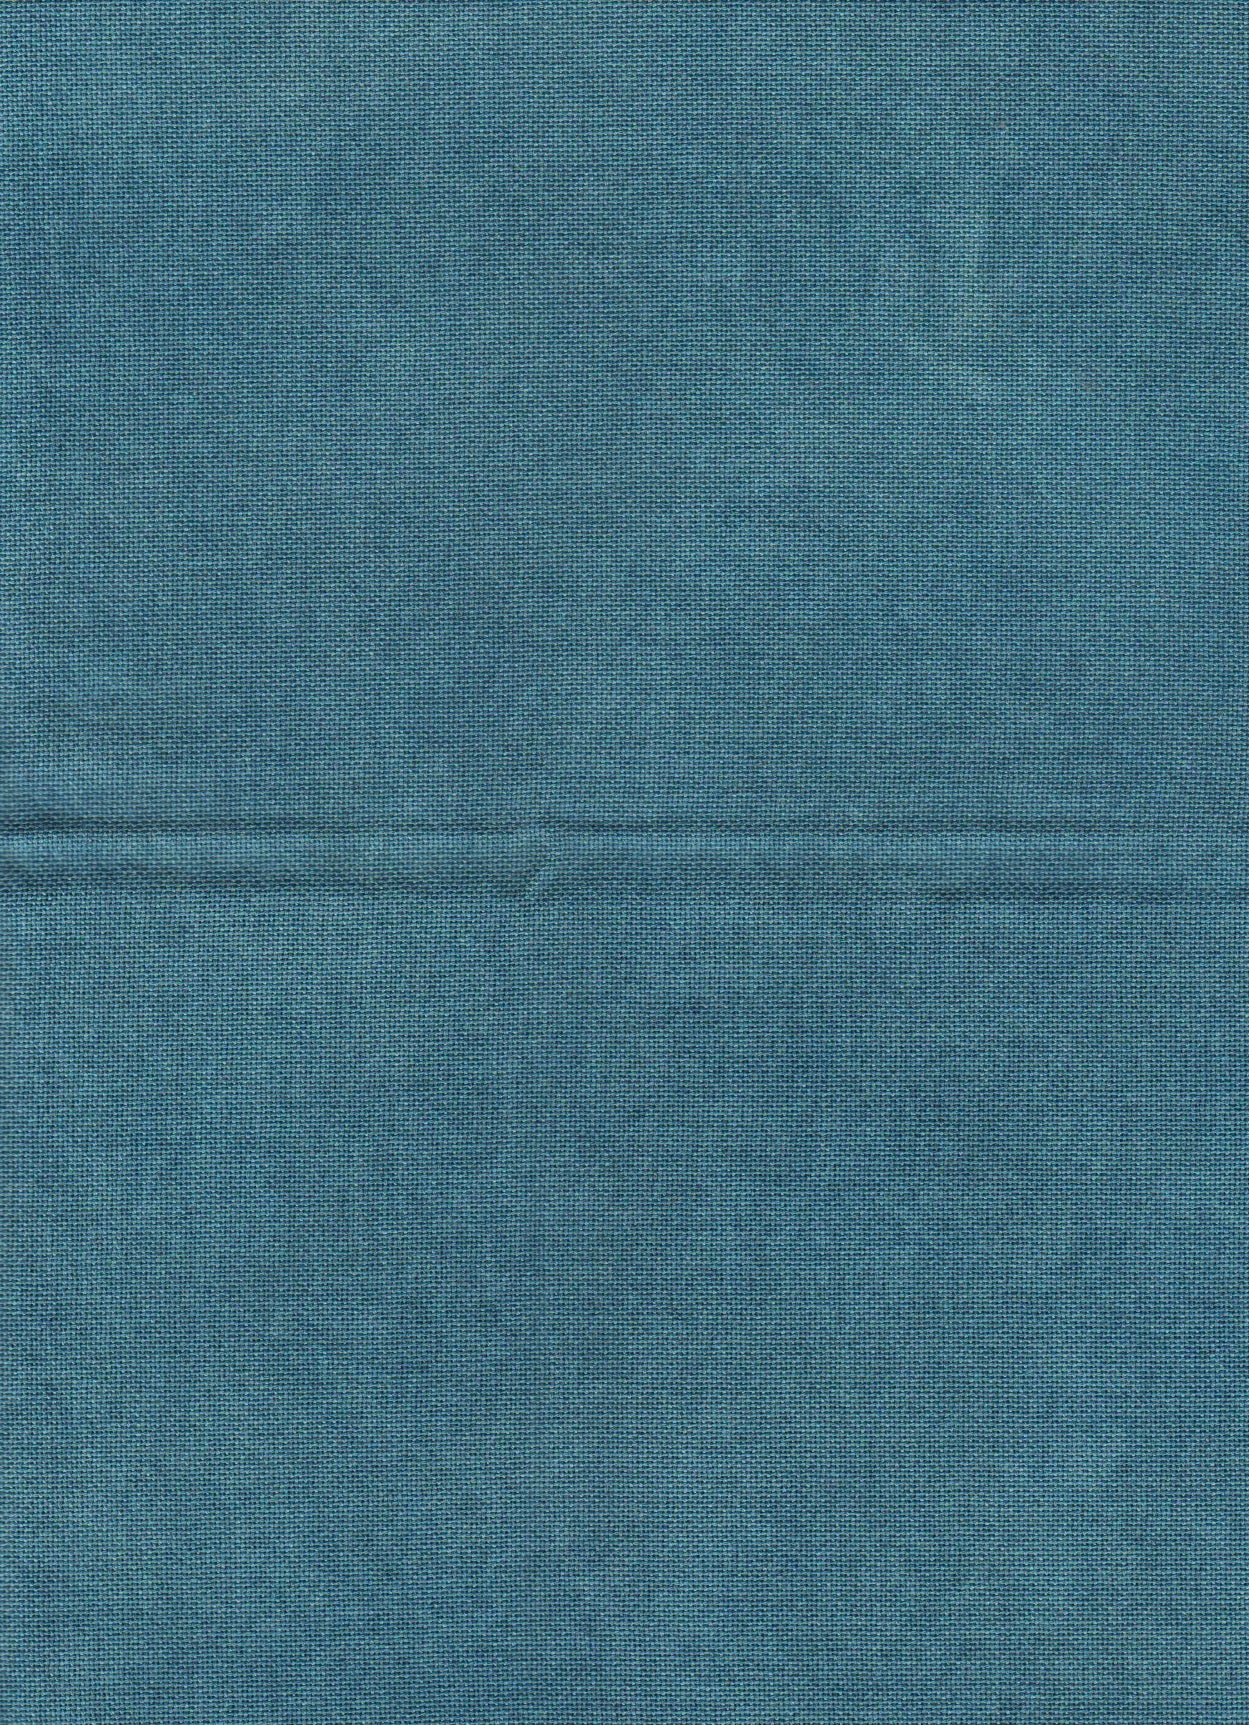 Dyeing for Cross-Stitch Lugana 28ct 20x20 Blue HD Fabric